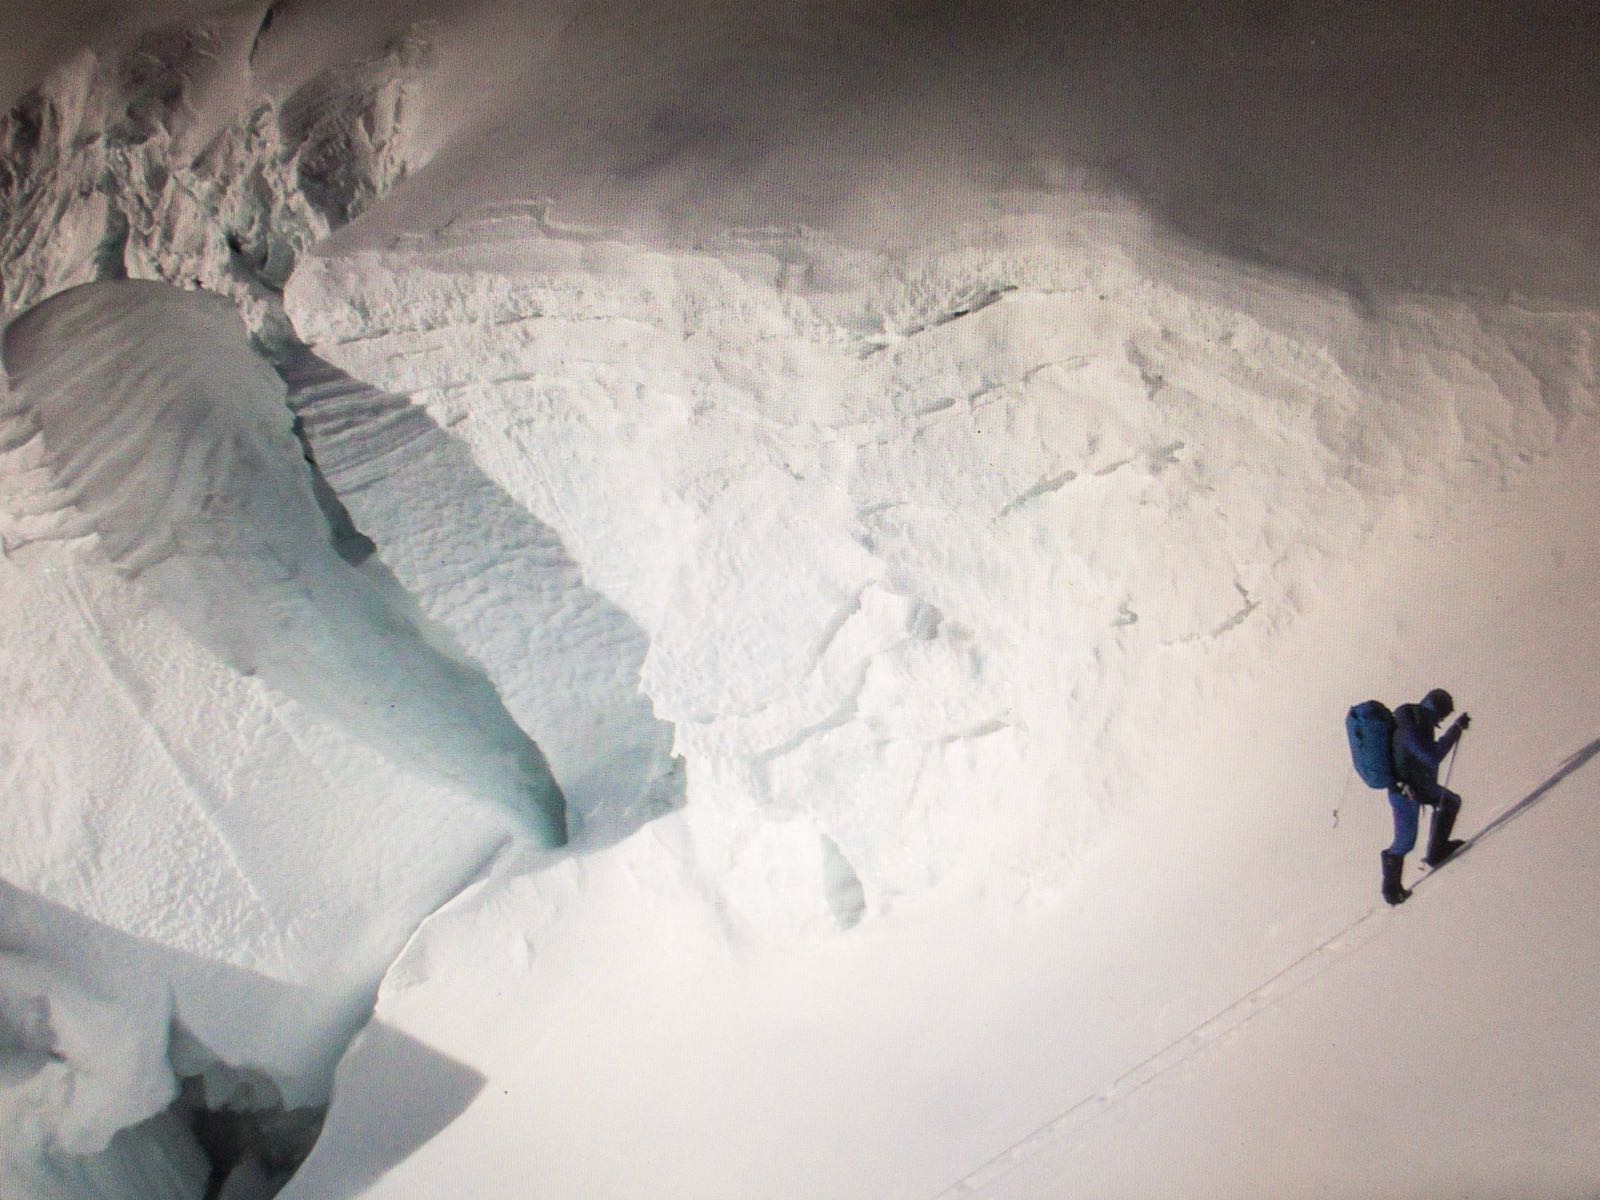 Jornet on his May 21 speed ascent of Everest's North Col route. [Photo] Sebastien Montaz-Rosset/Kilian Jornet collection